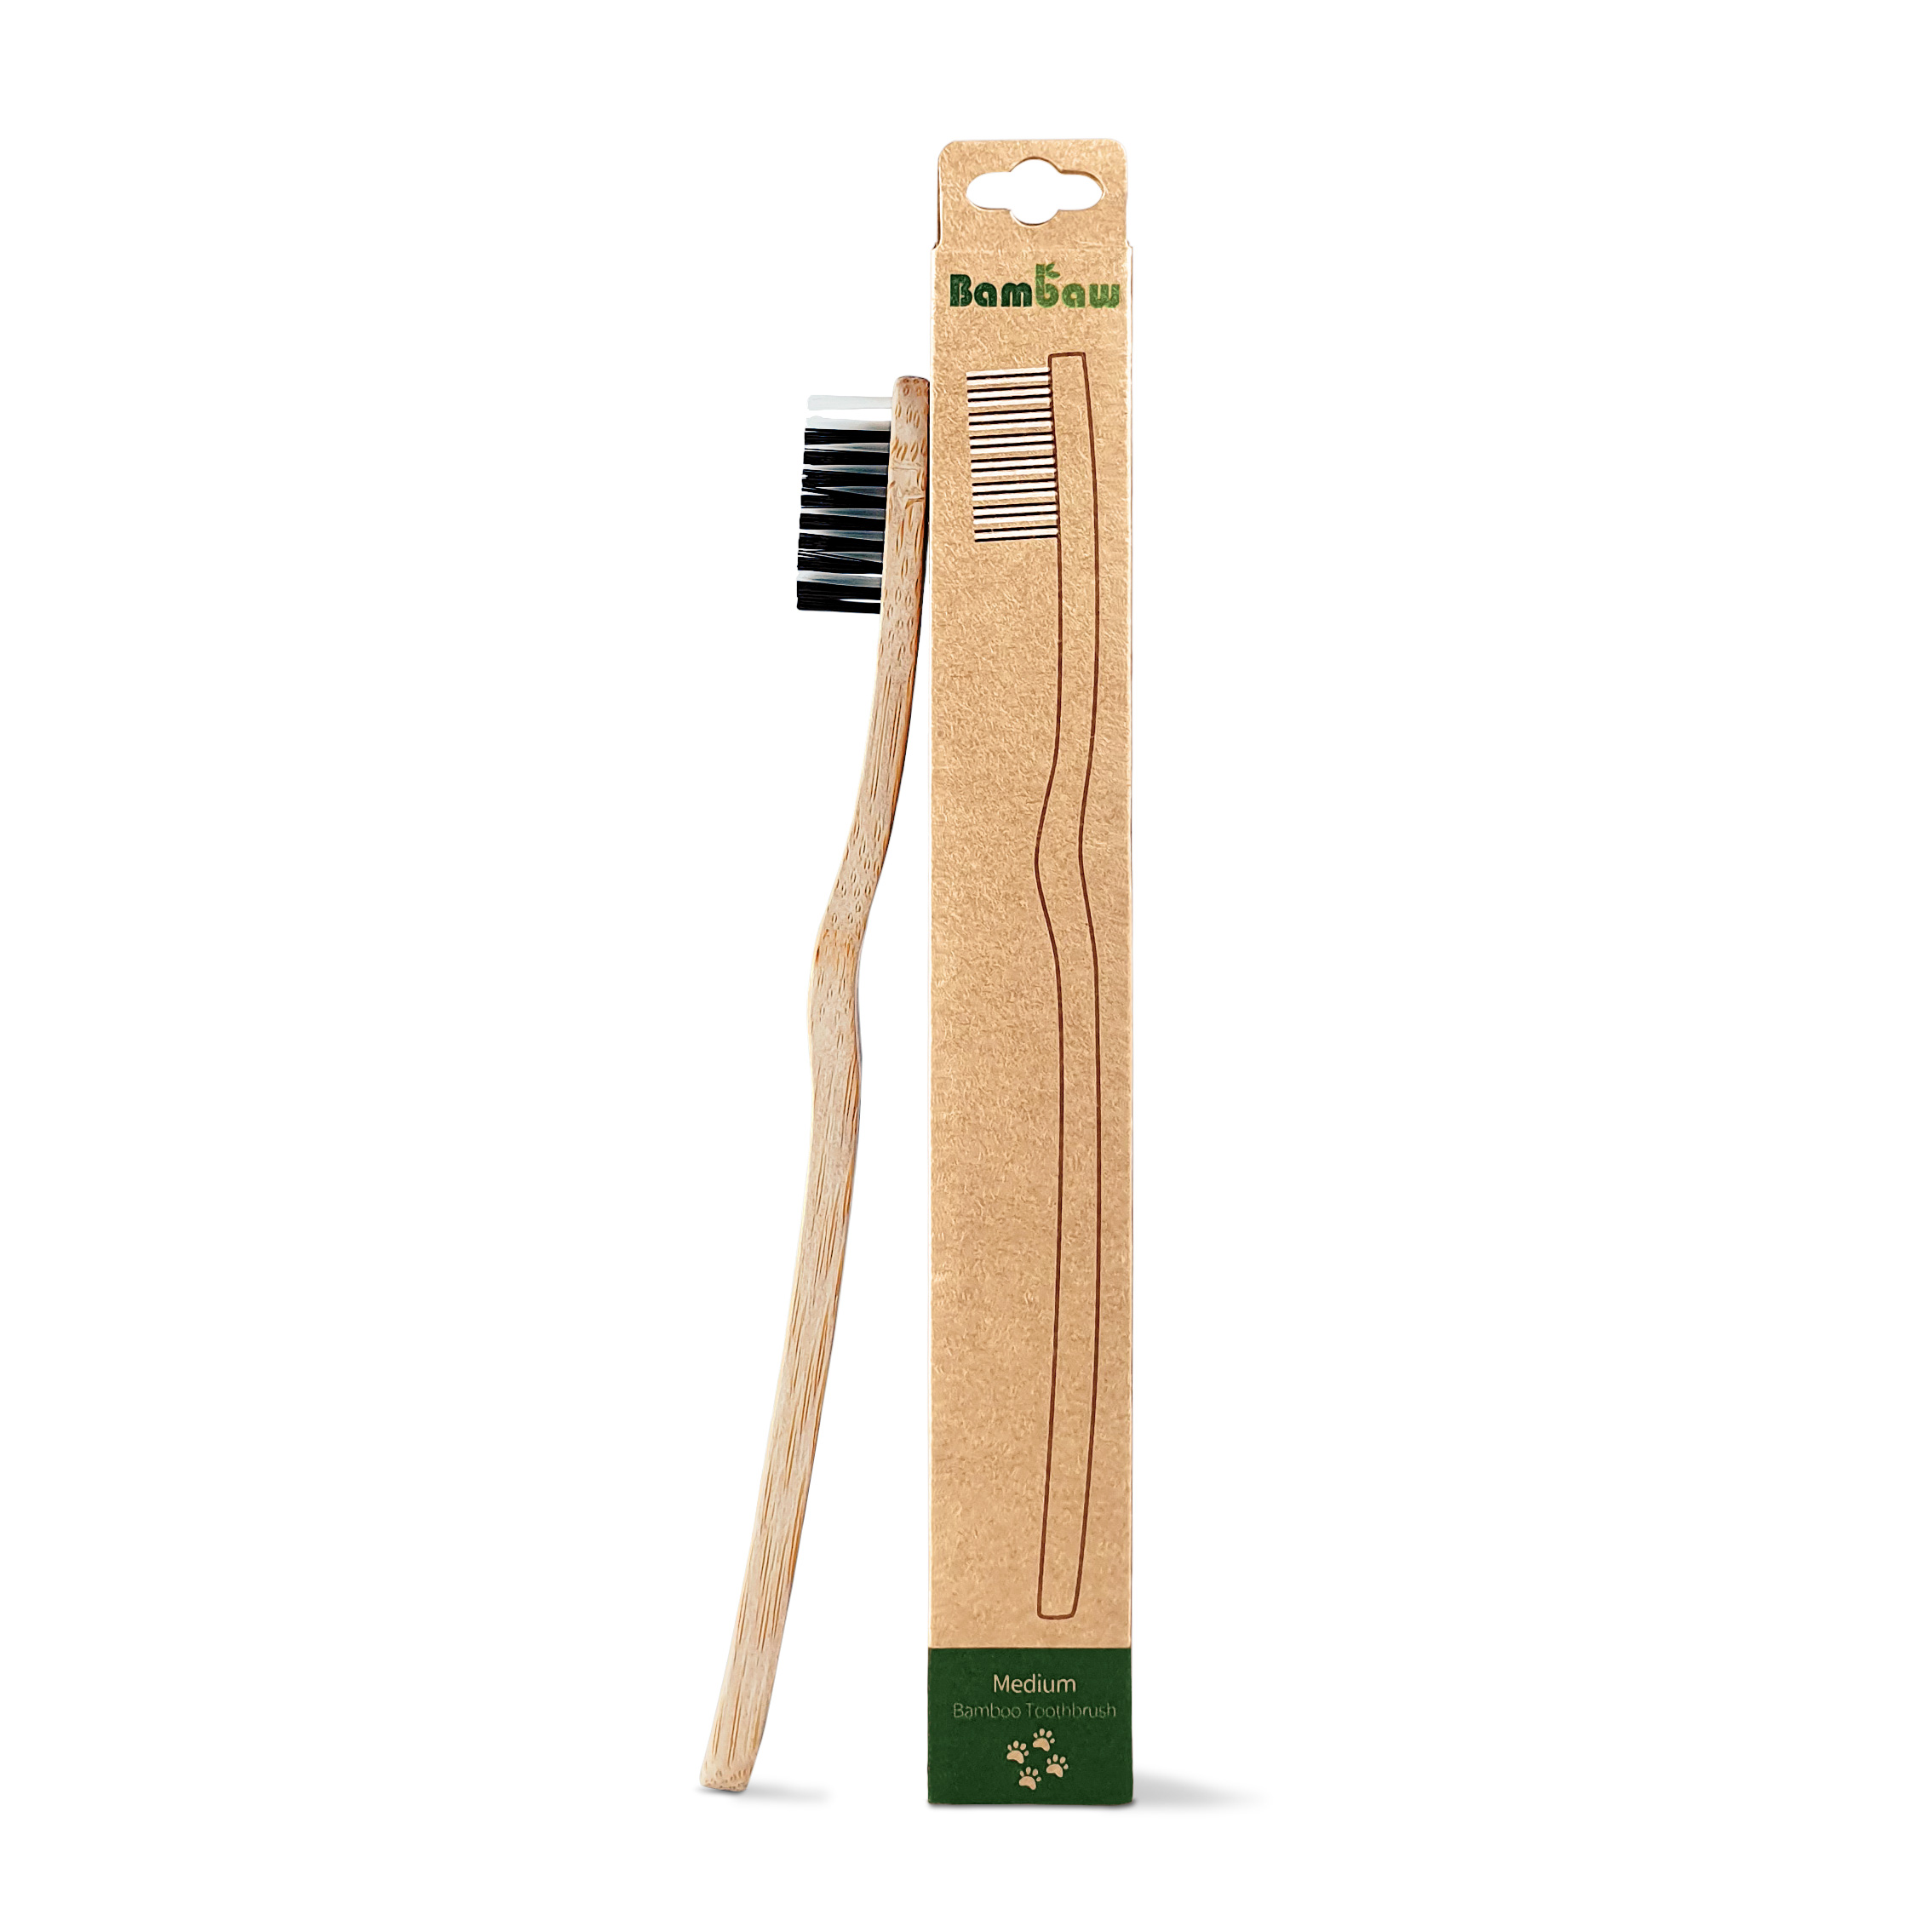 Bambaw Bamboo toothbrush - Medium